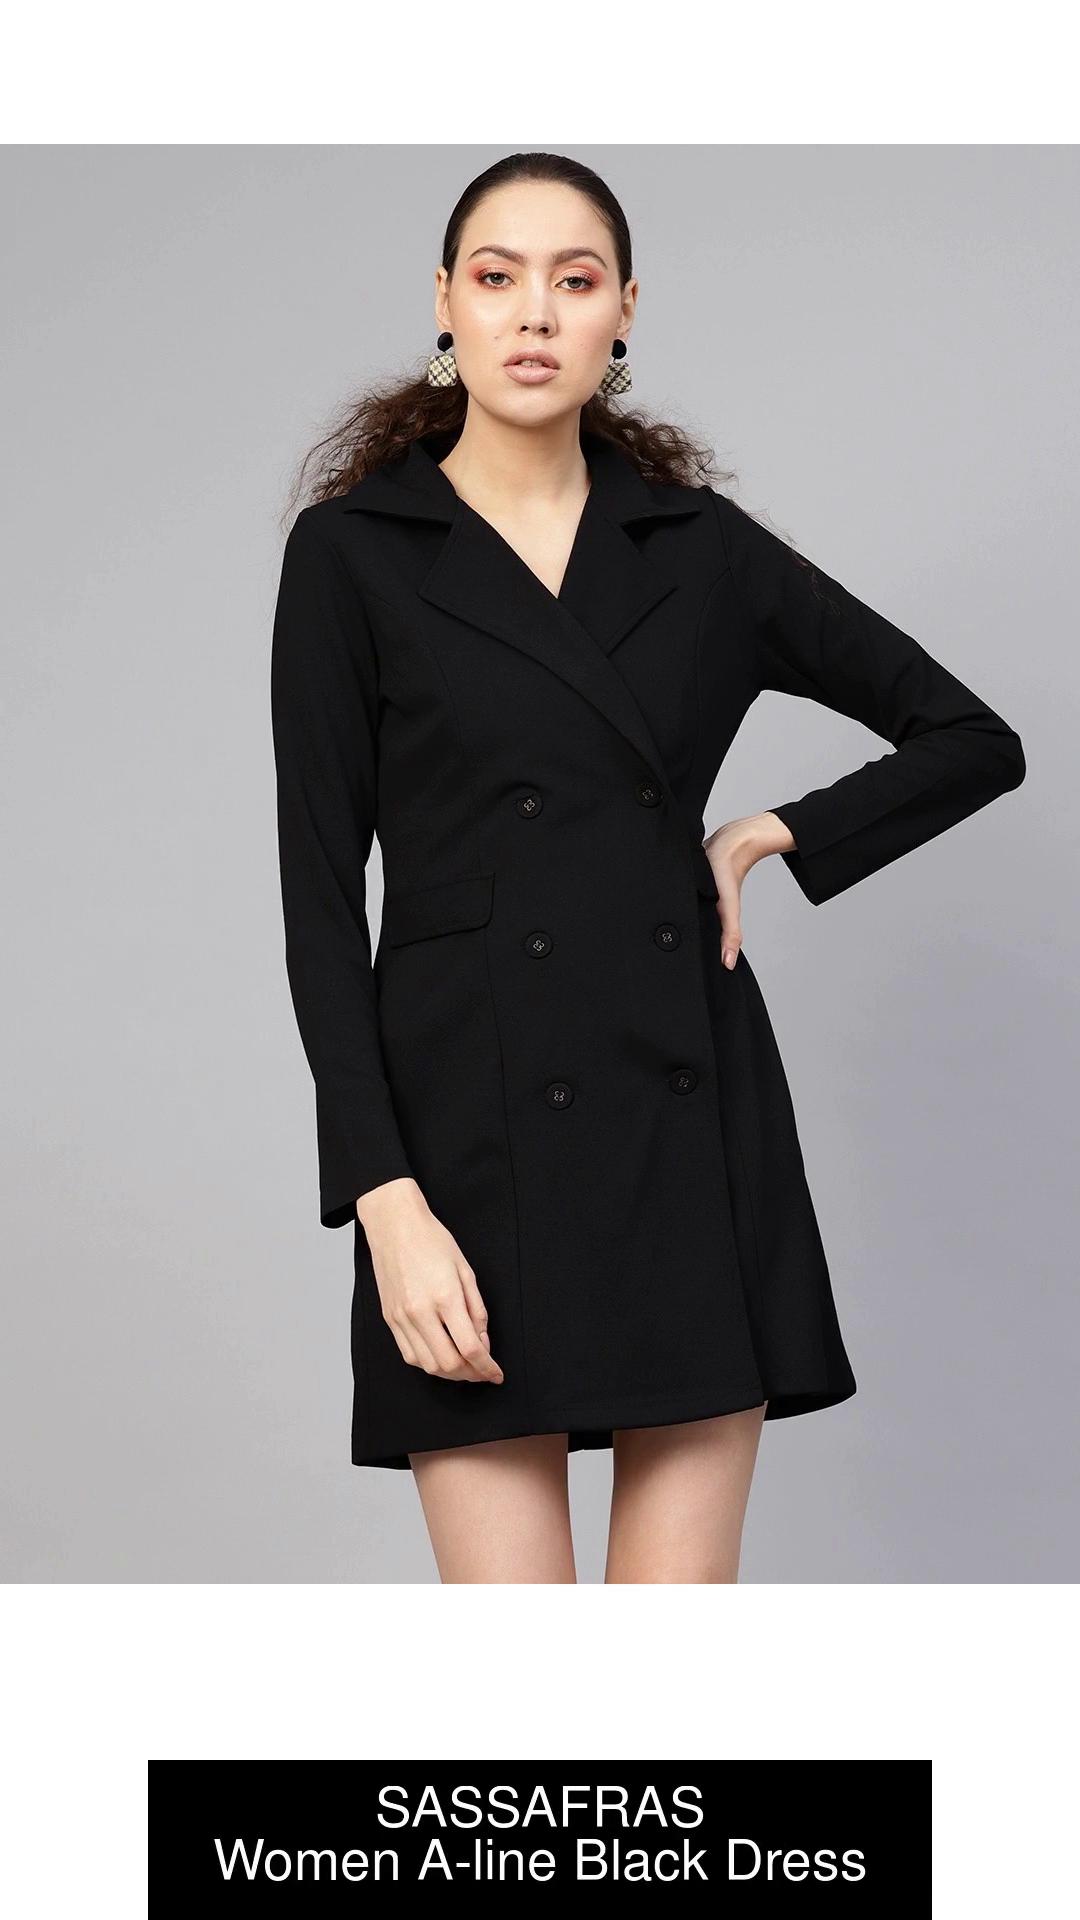 Black Blazer Dresses for Women - Up to 80% off